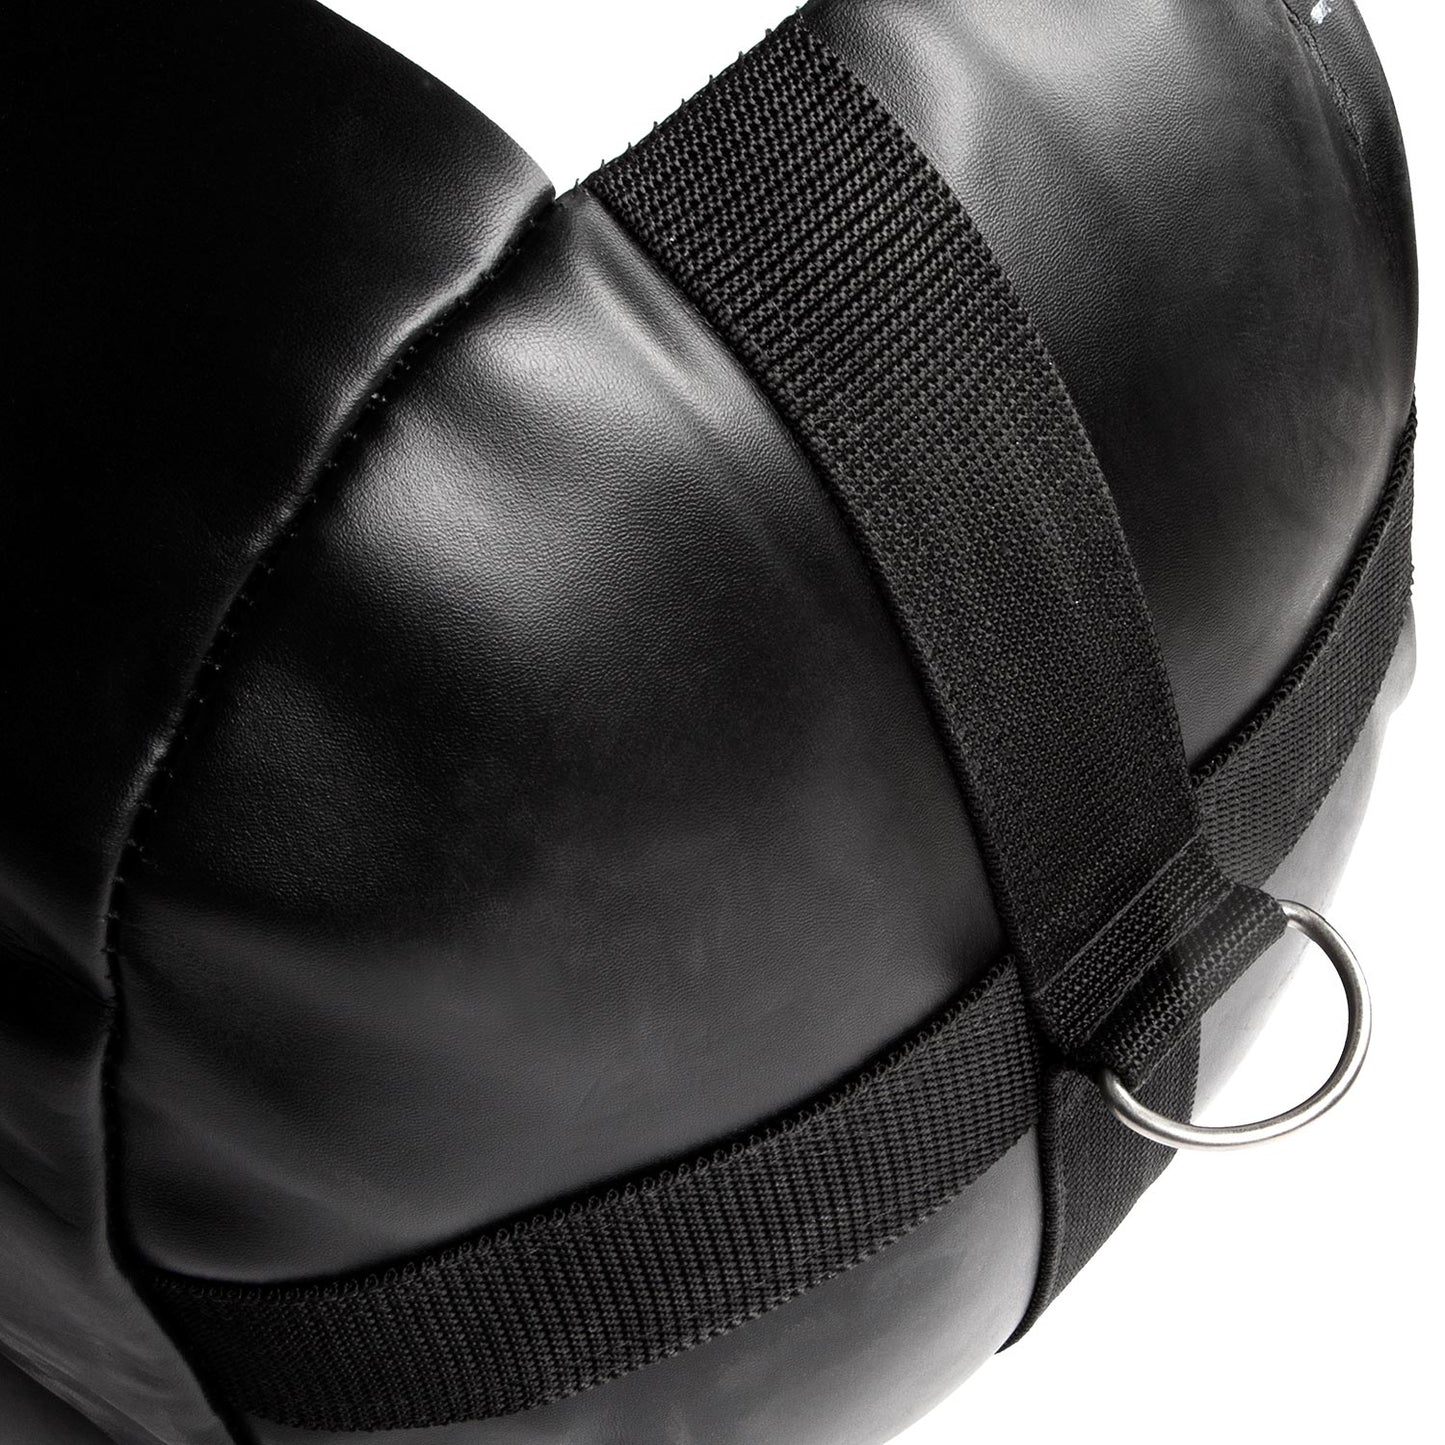 Venum Hurricane Punching Bag Black - New PU Leather - Filled